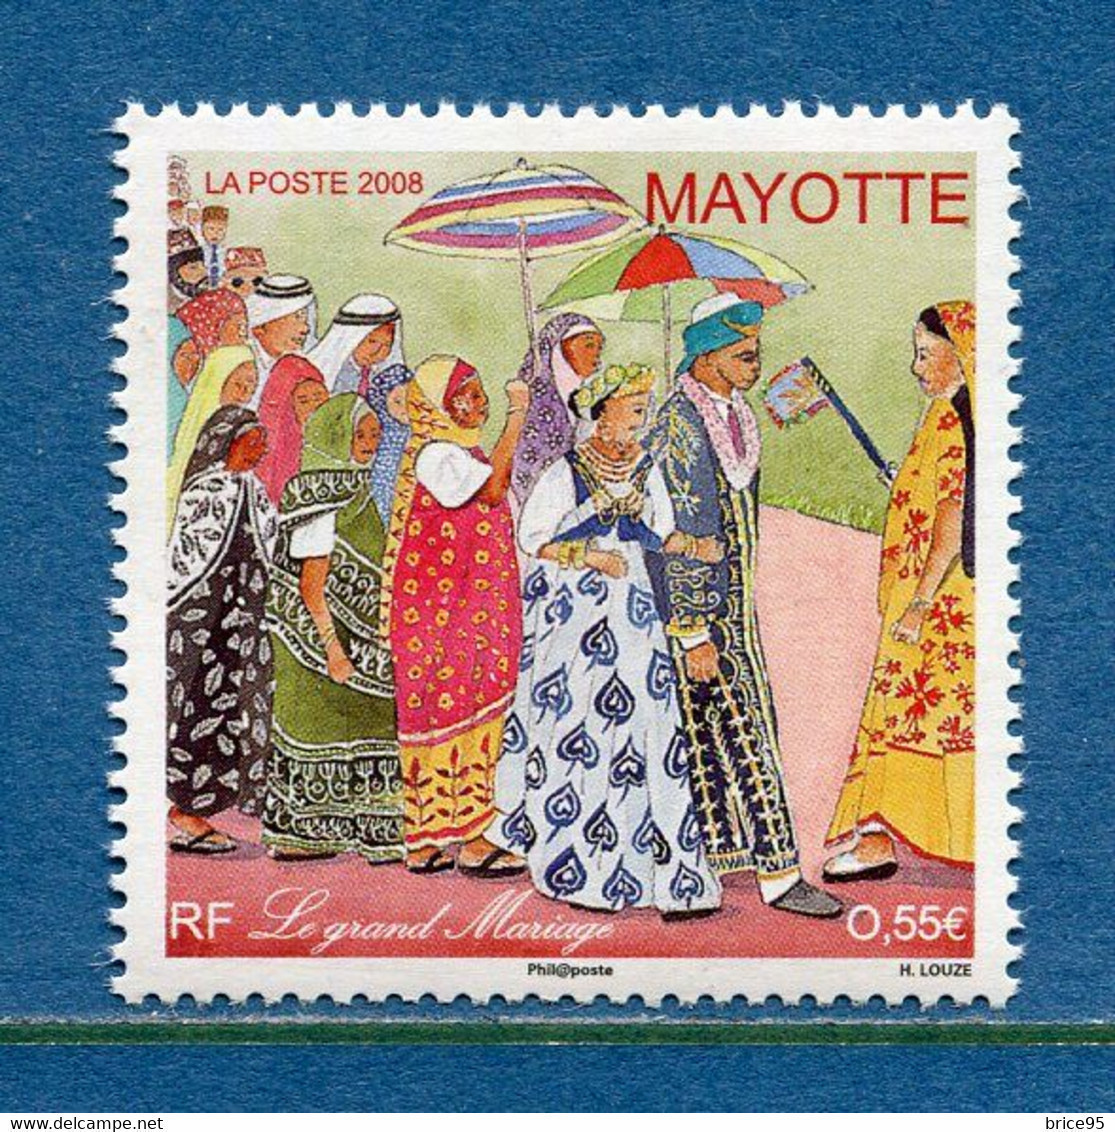 Mayotte - YT N° 215 ** - Neuf Sans Charnière - 2008 - Ungebraucht